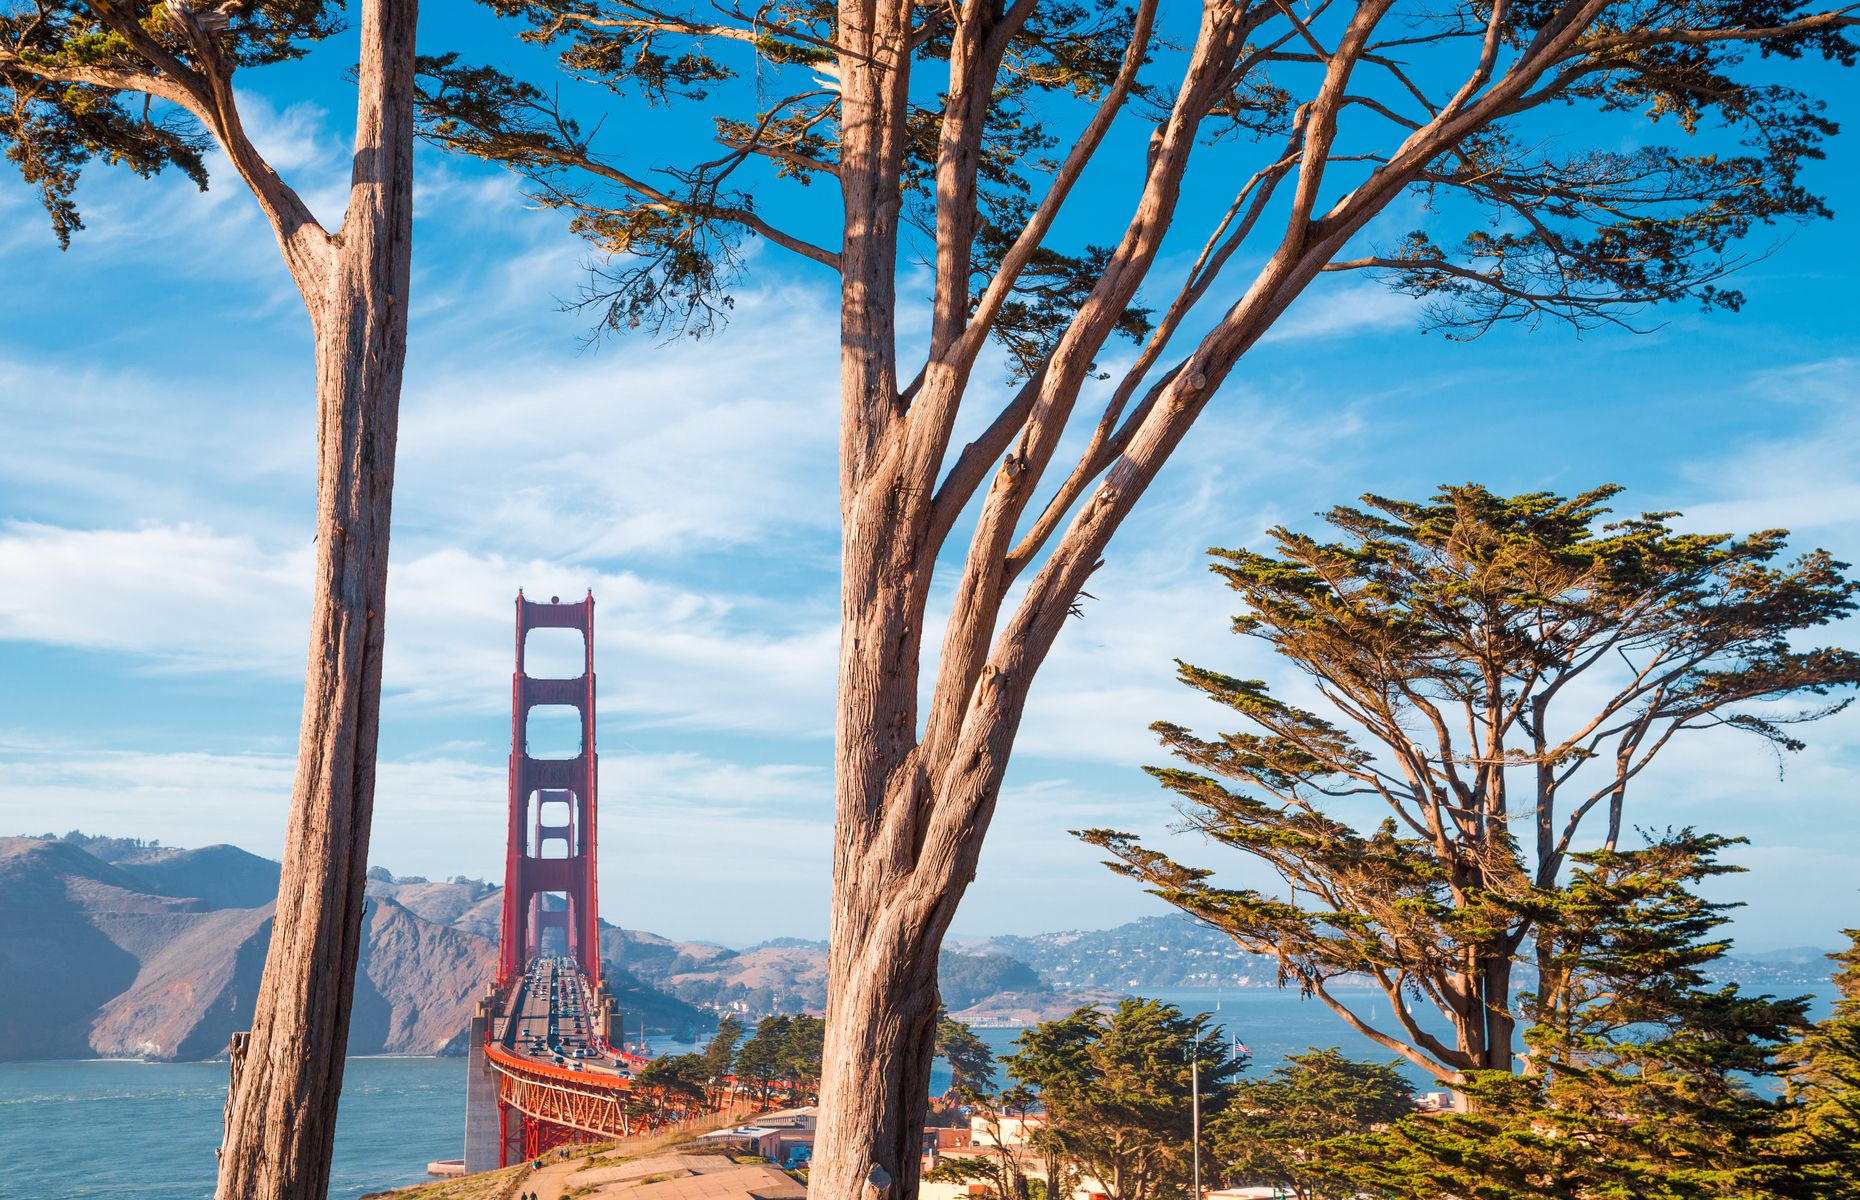 Presidio Park San Francisco with bridge (Image: Canadastock/Shutterstock)